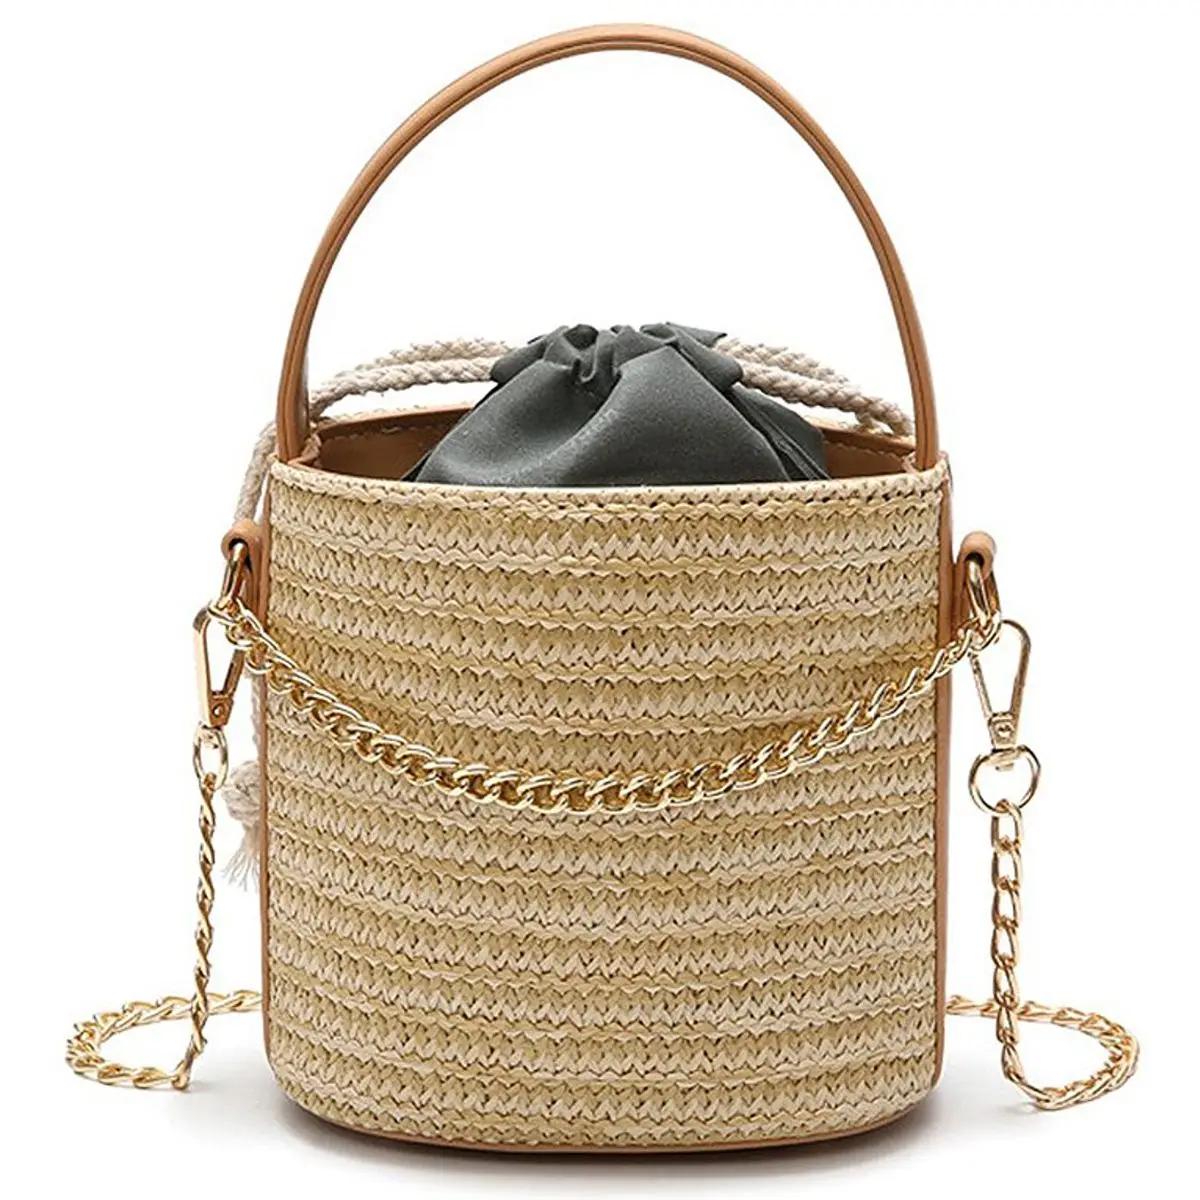 ABDB Women Straw Handbag Tote Summer Holiday Woven Bucket Bag Leisure Chain Shoulder Bag ...